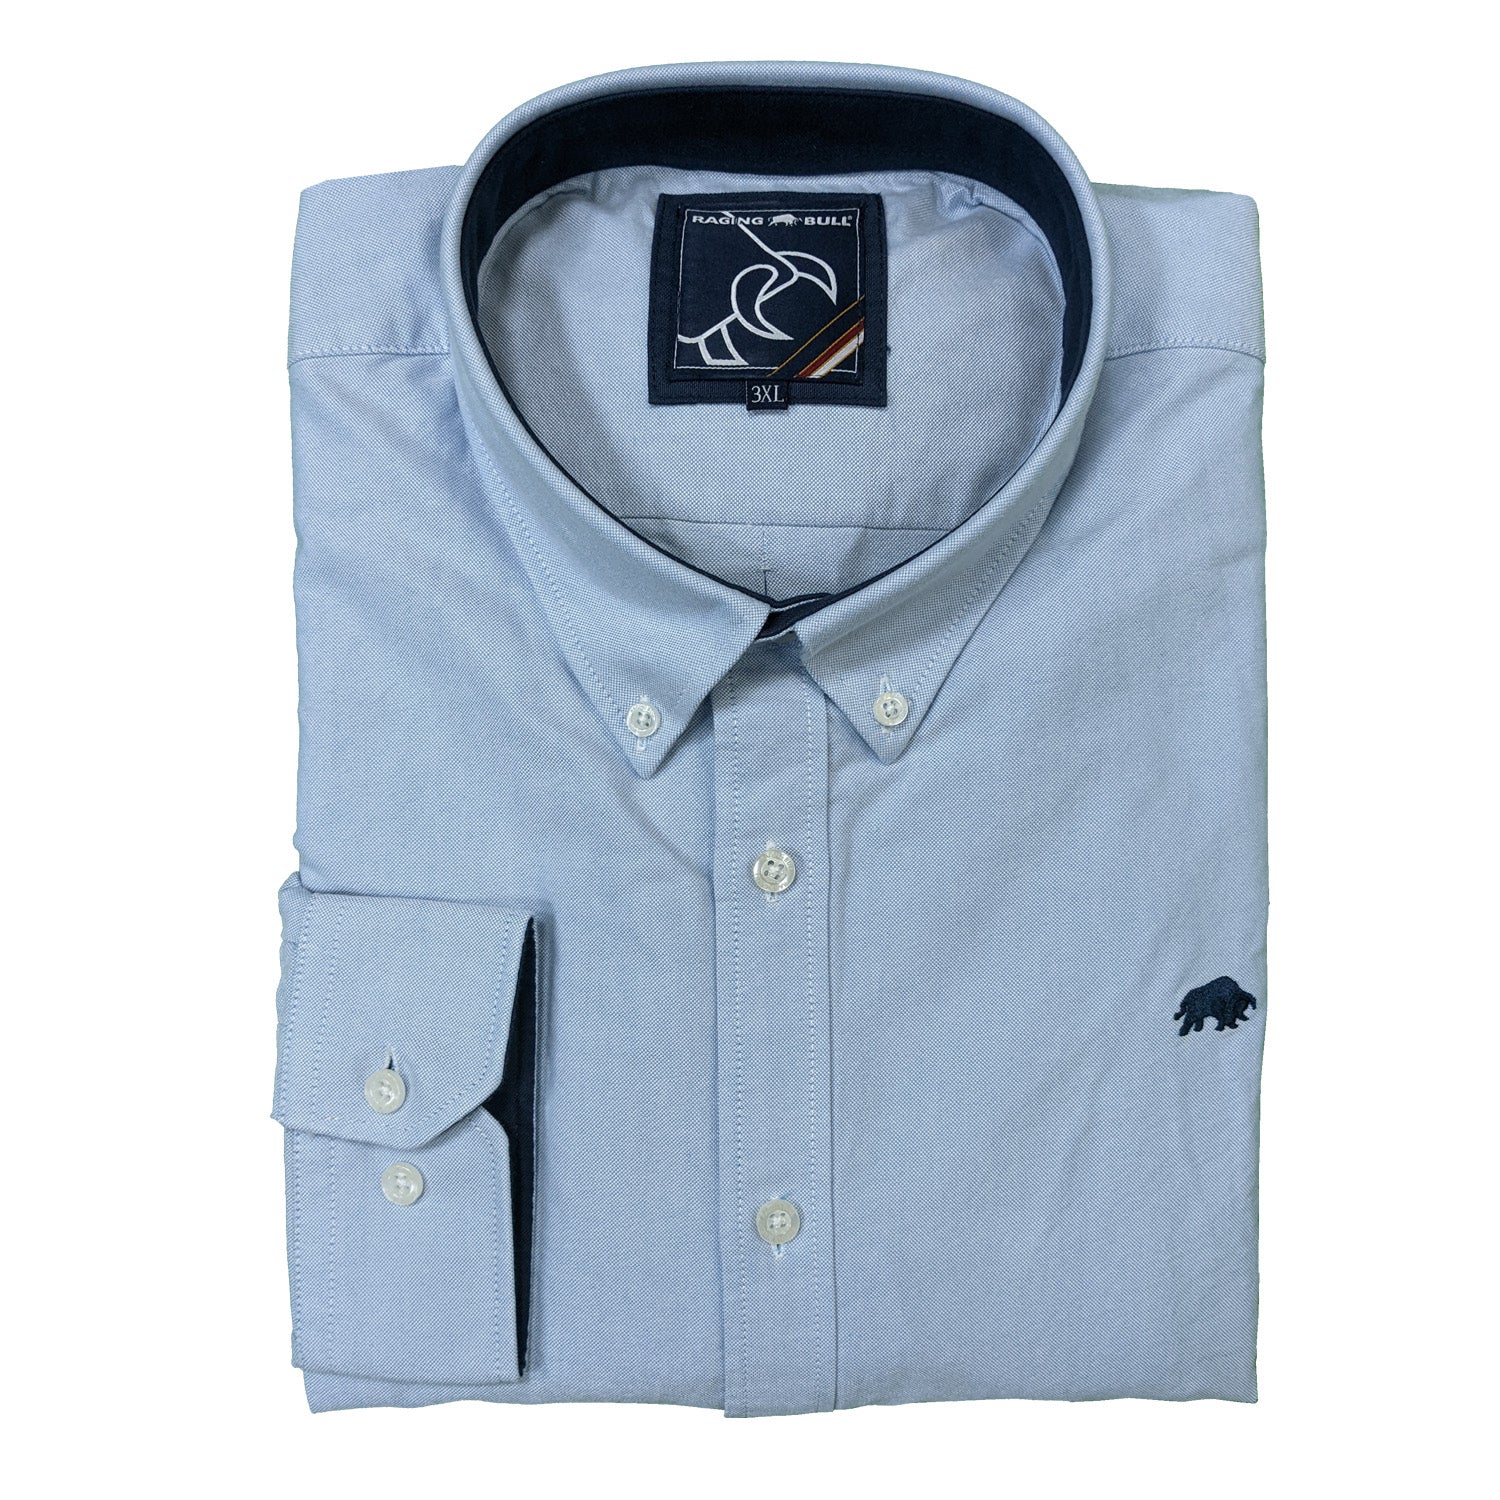 Raging Bull L/S Signature Oxford Shirt - A18CS242 - Sky Blue 1